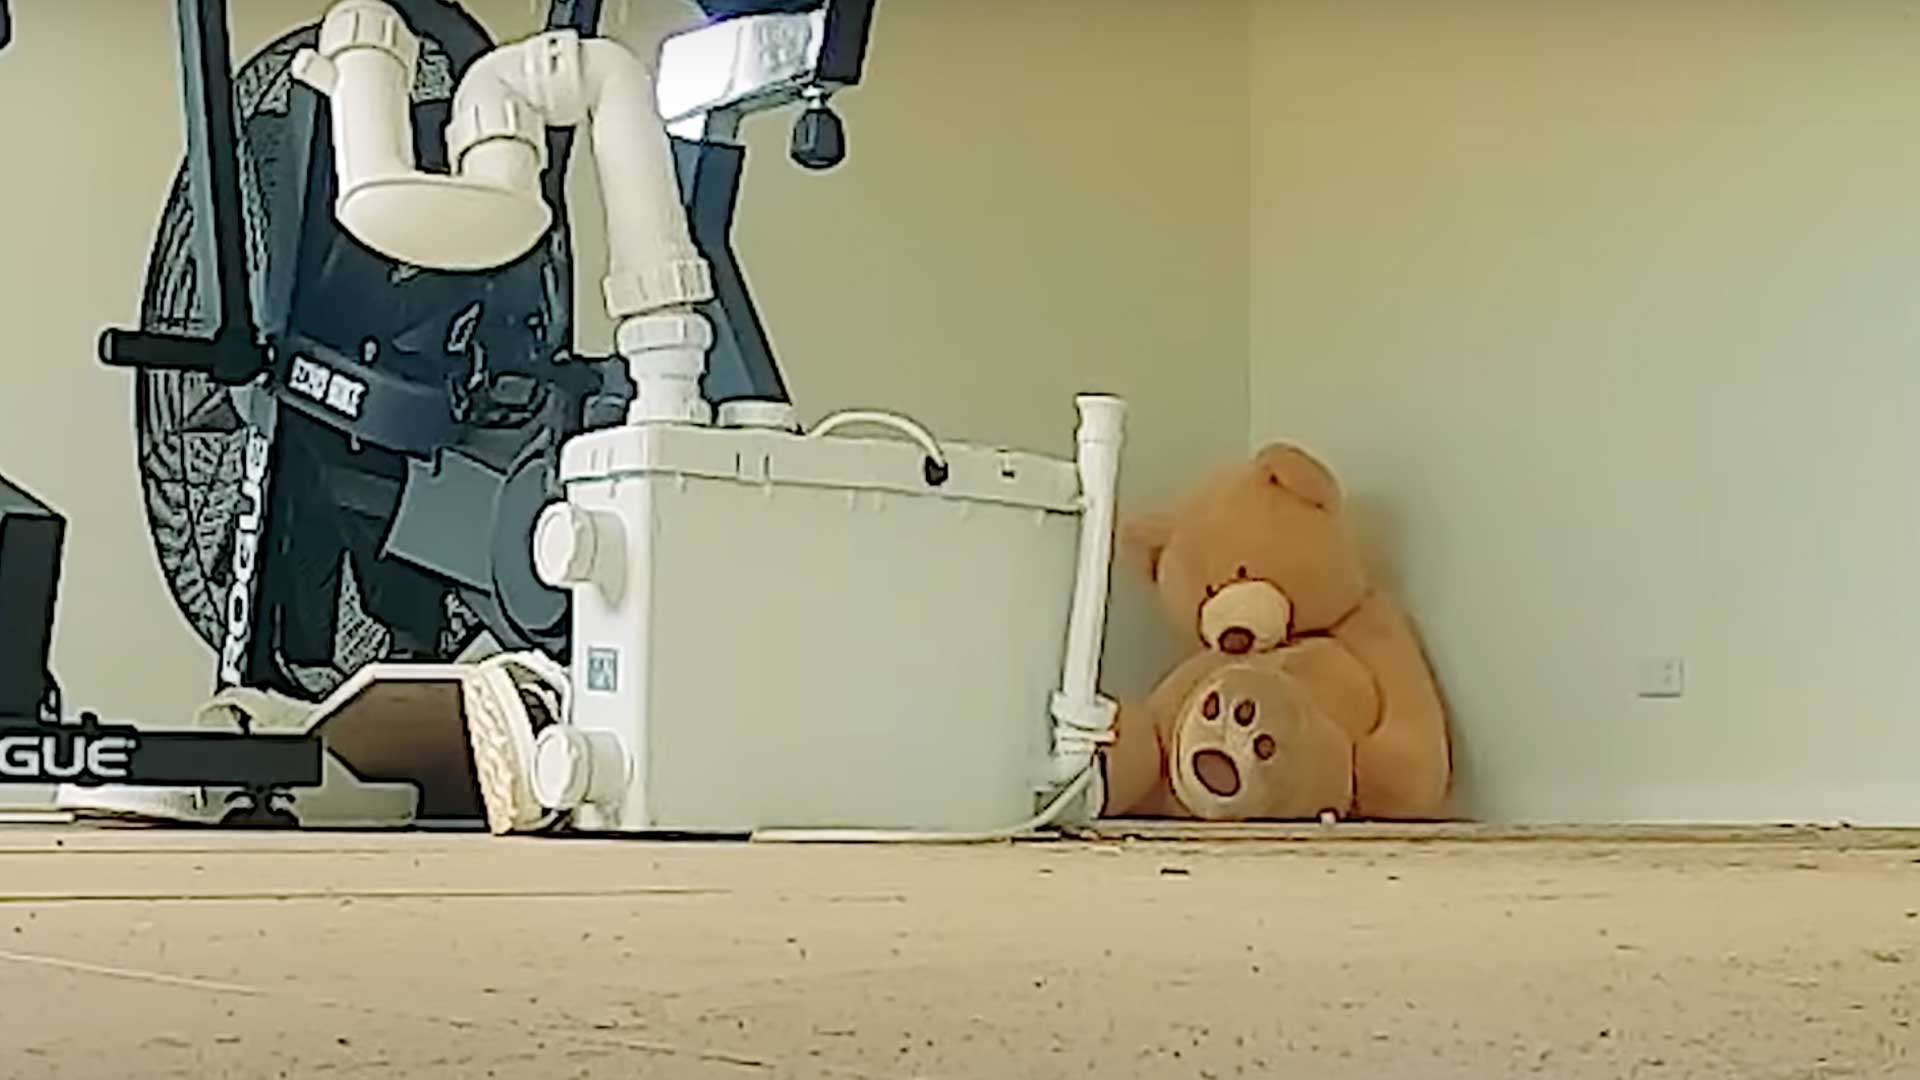 A giant teddy bear in a home gym